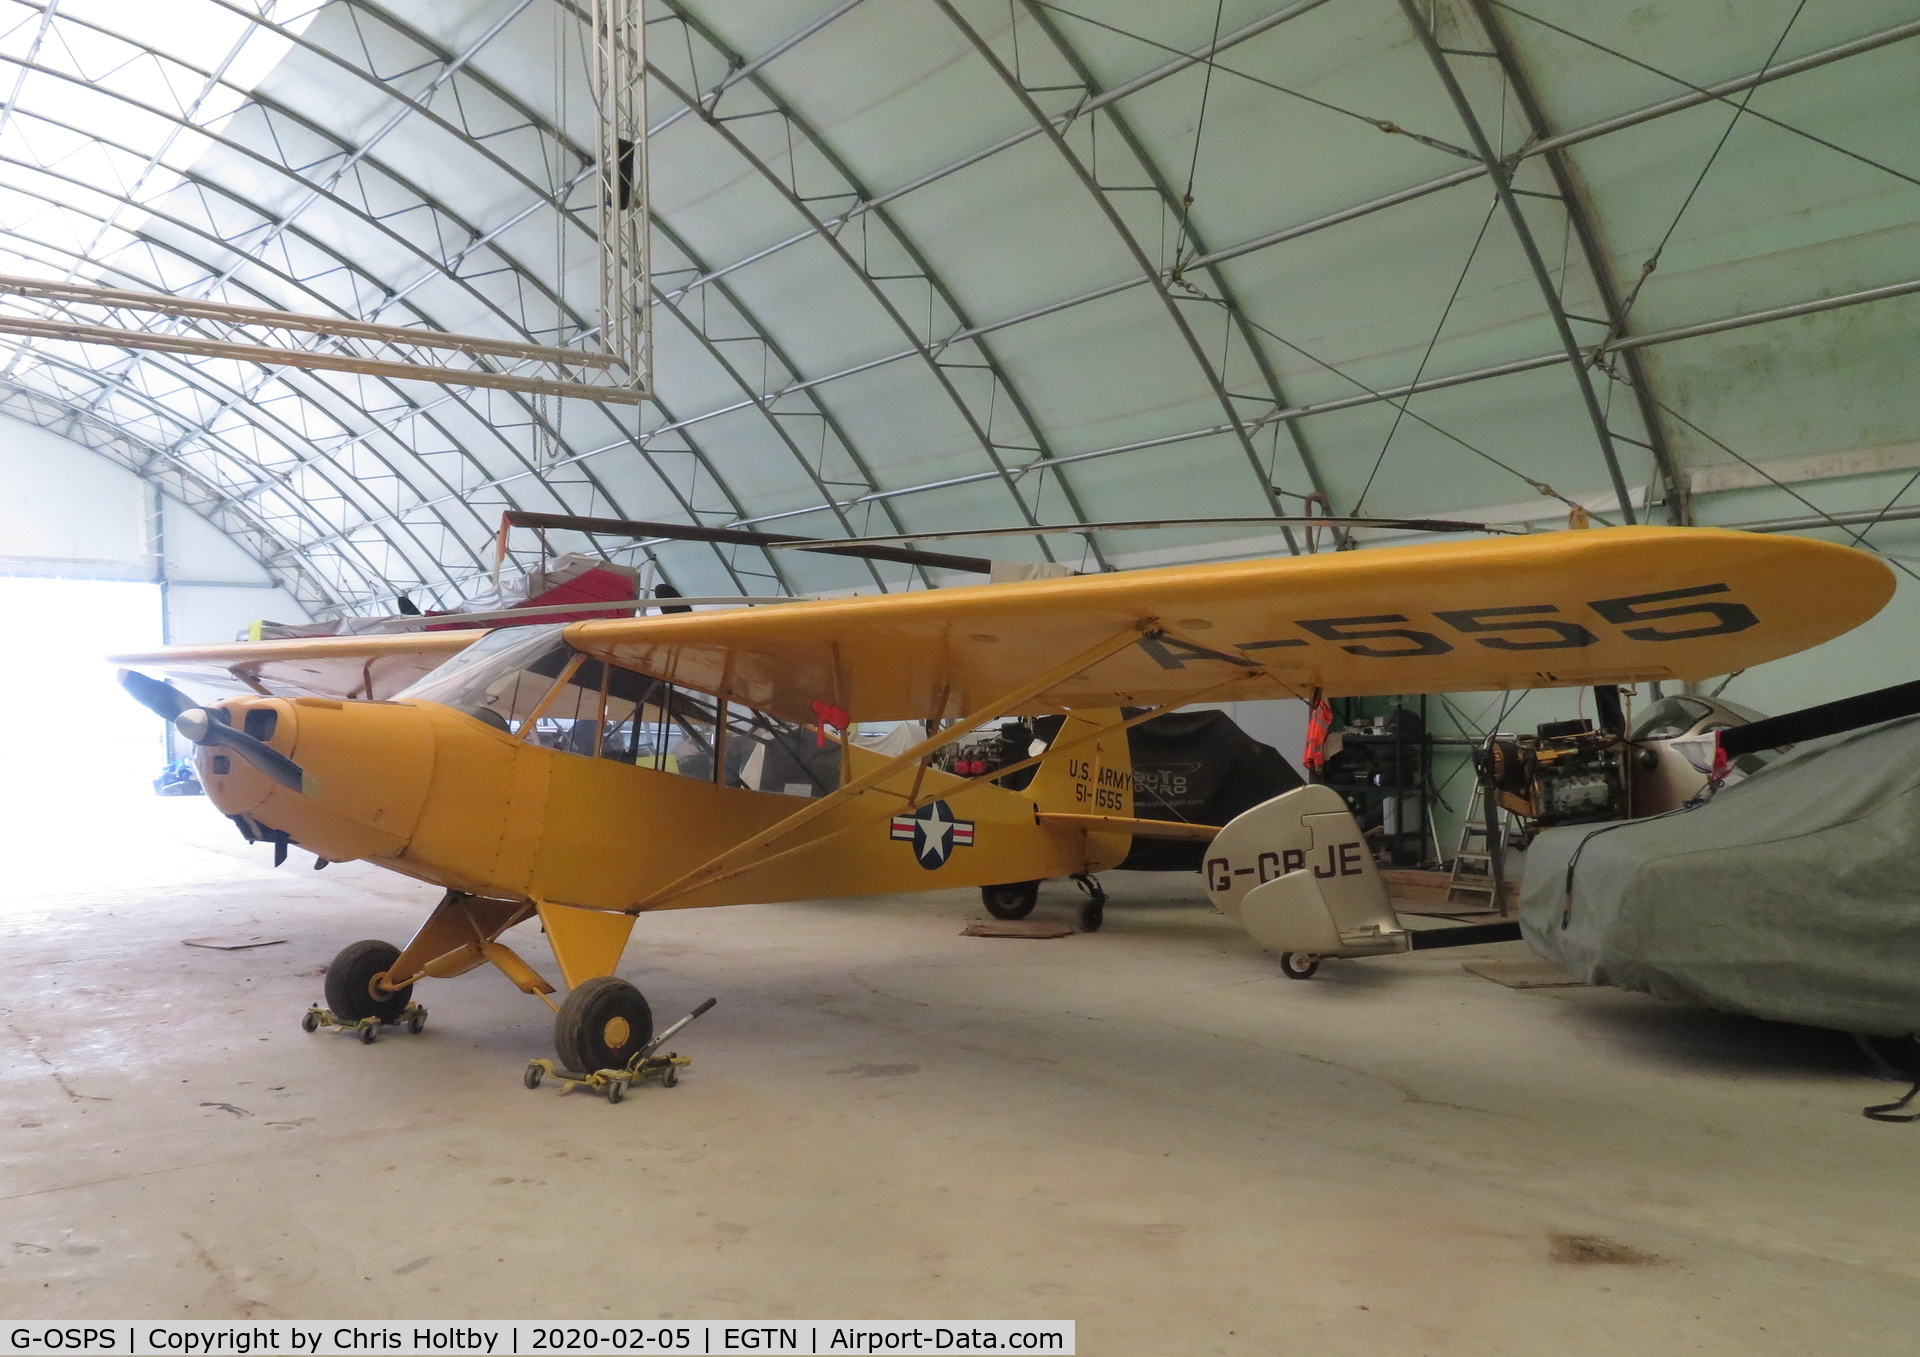 G-OSPS, 1951 Piper L-18C Super Cub (PA-18-95) C/N 18-1555, 1951 Super Cub now parked in Enstone Flying Club's hangar